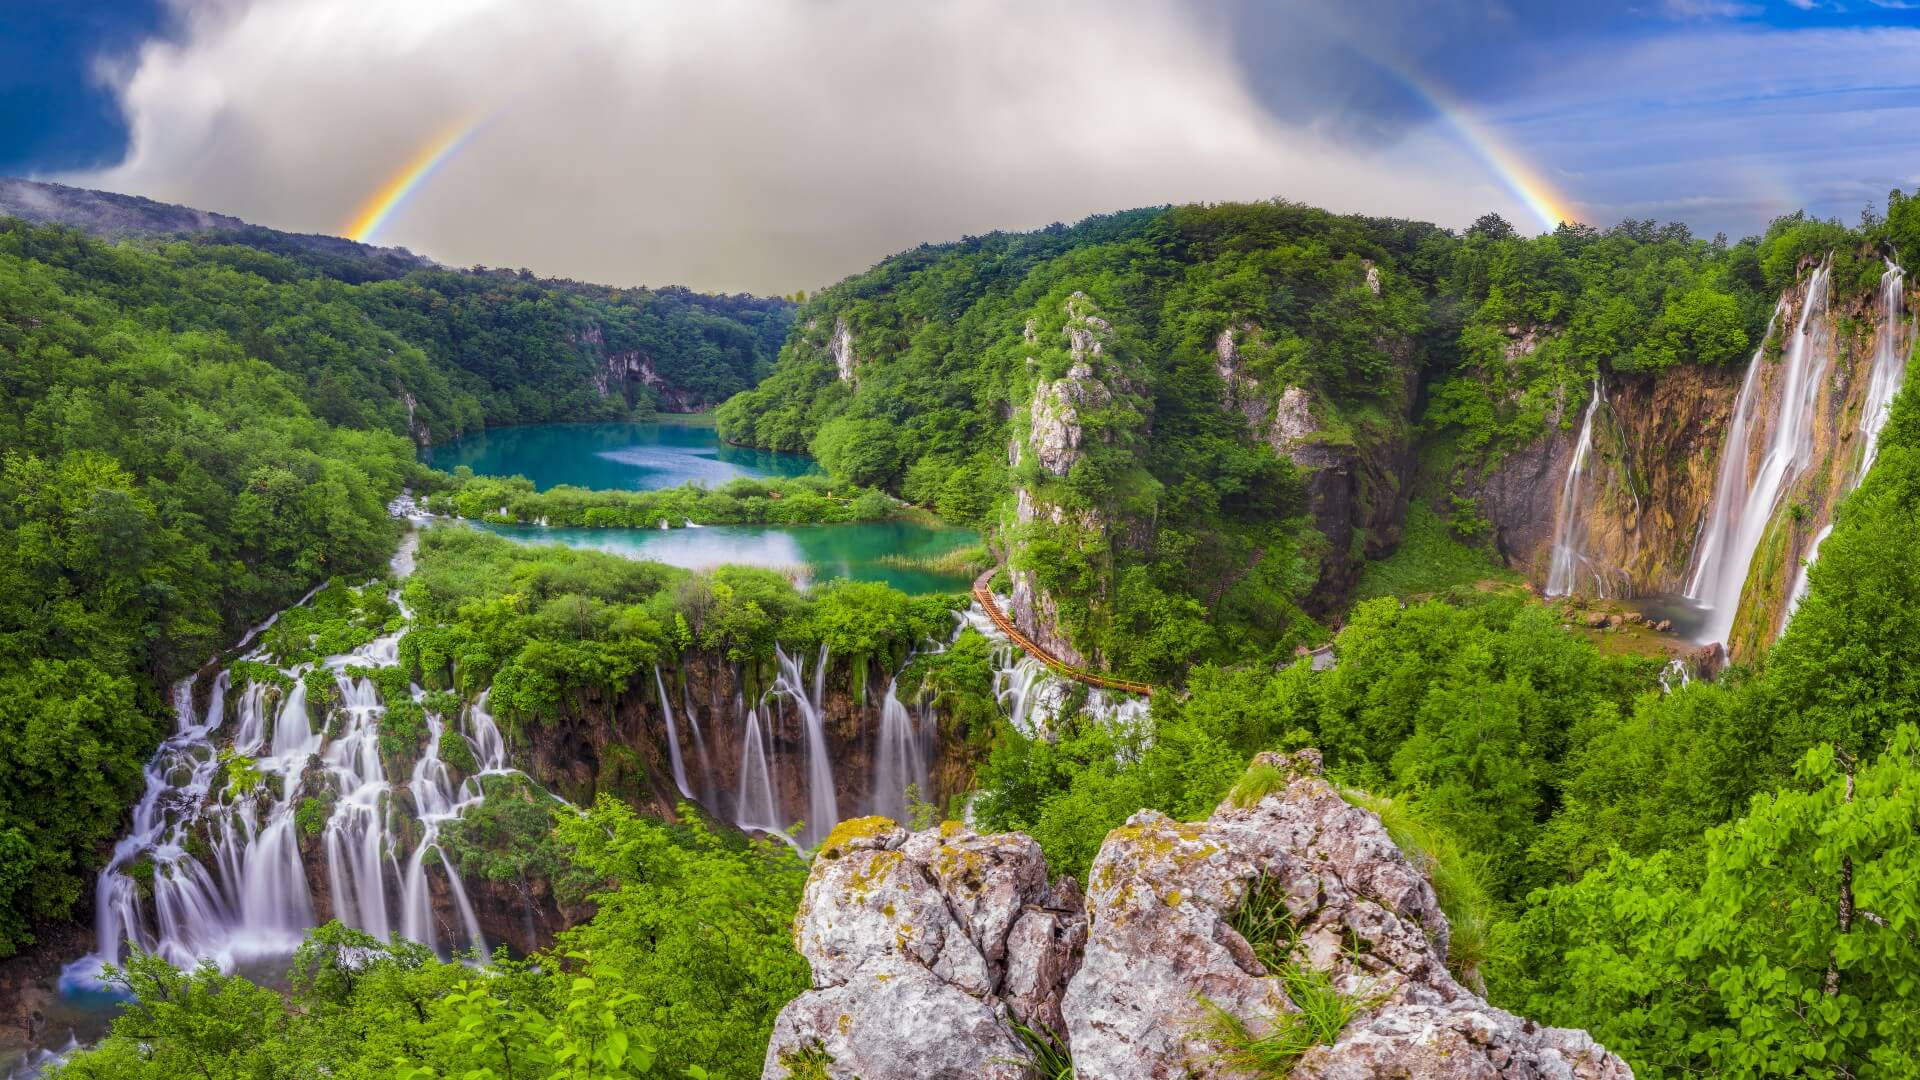 The Plitvice Lakes National Park, Croatia